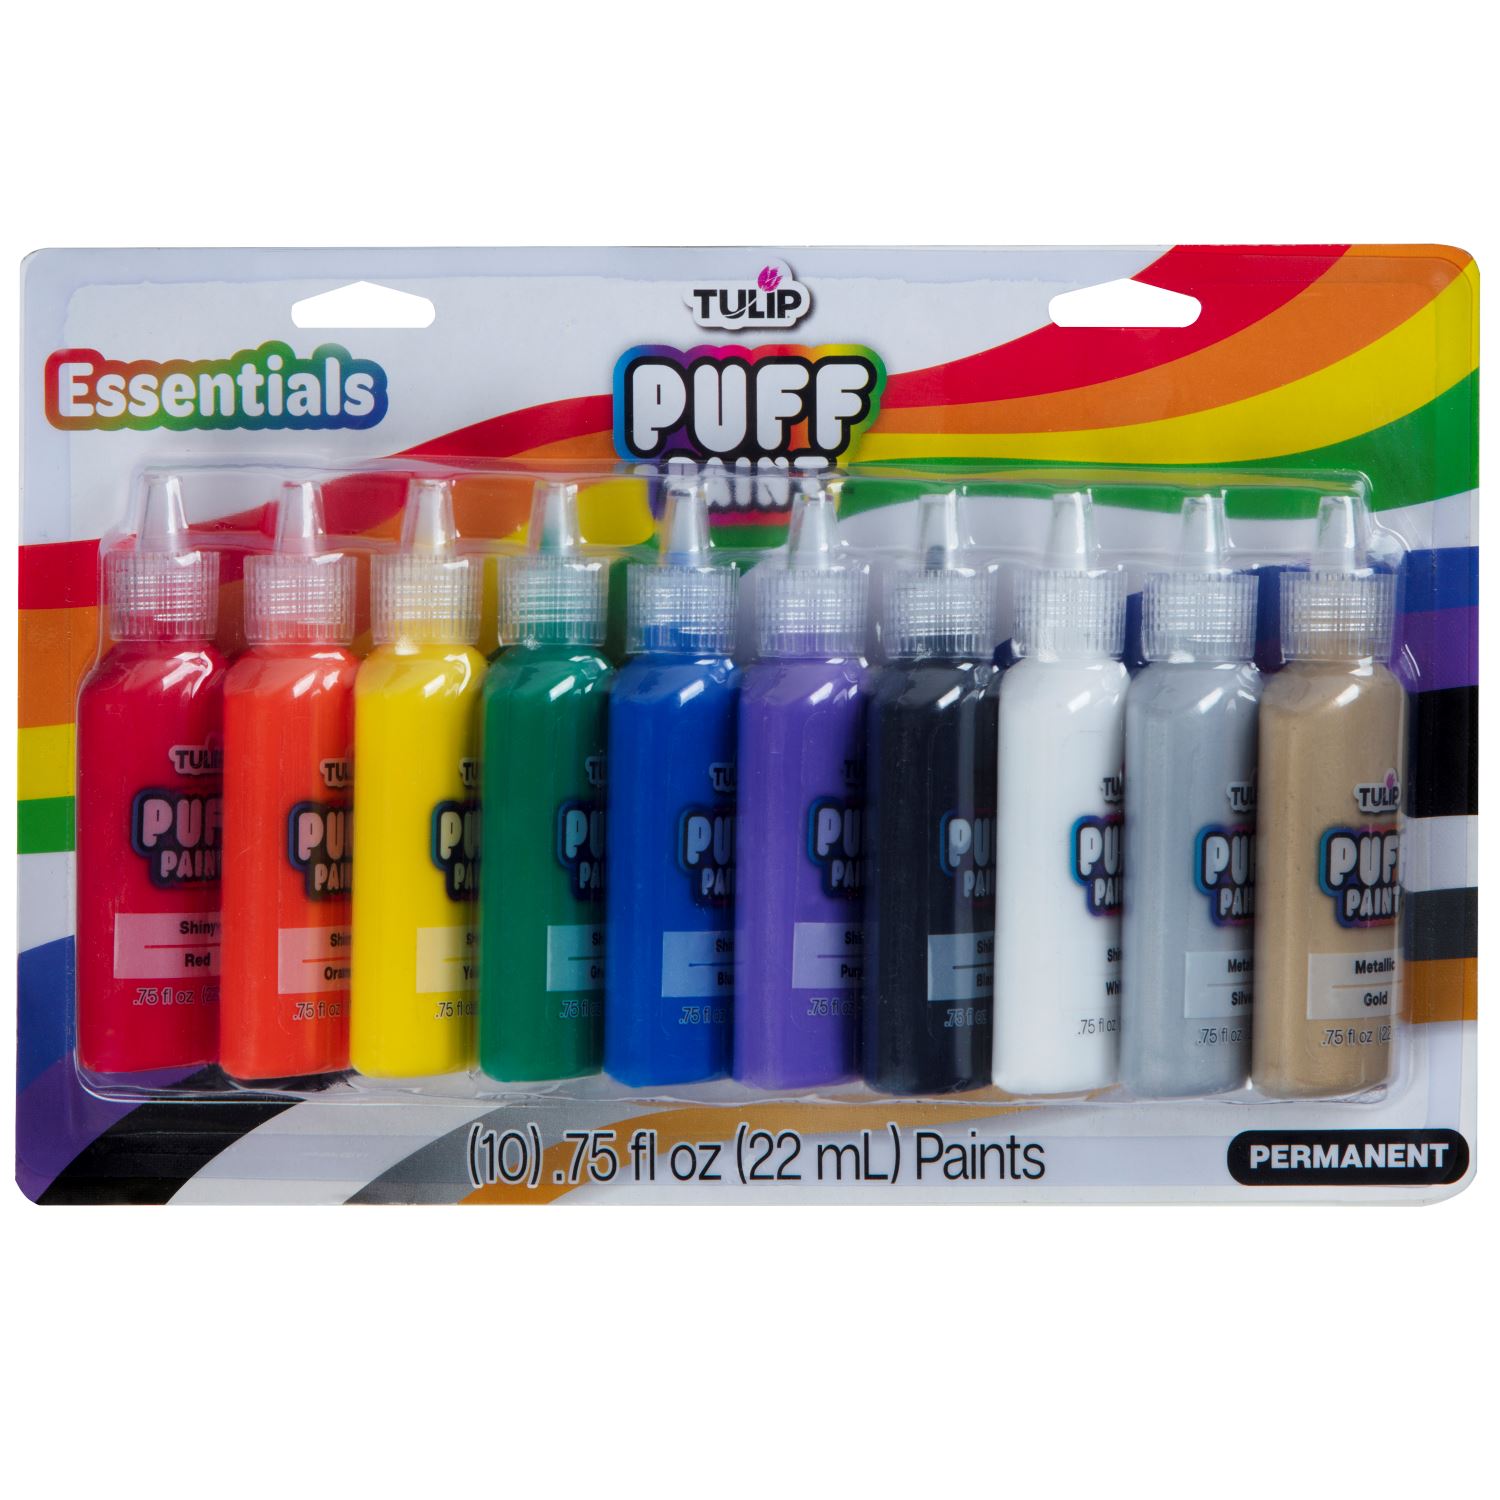 iLoveToCreate Blog: Puffy Paint Monogram Storage  Puffy paint designs,  Puffy paint crafts, Tulip fabric paint